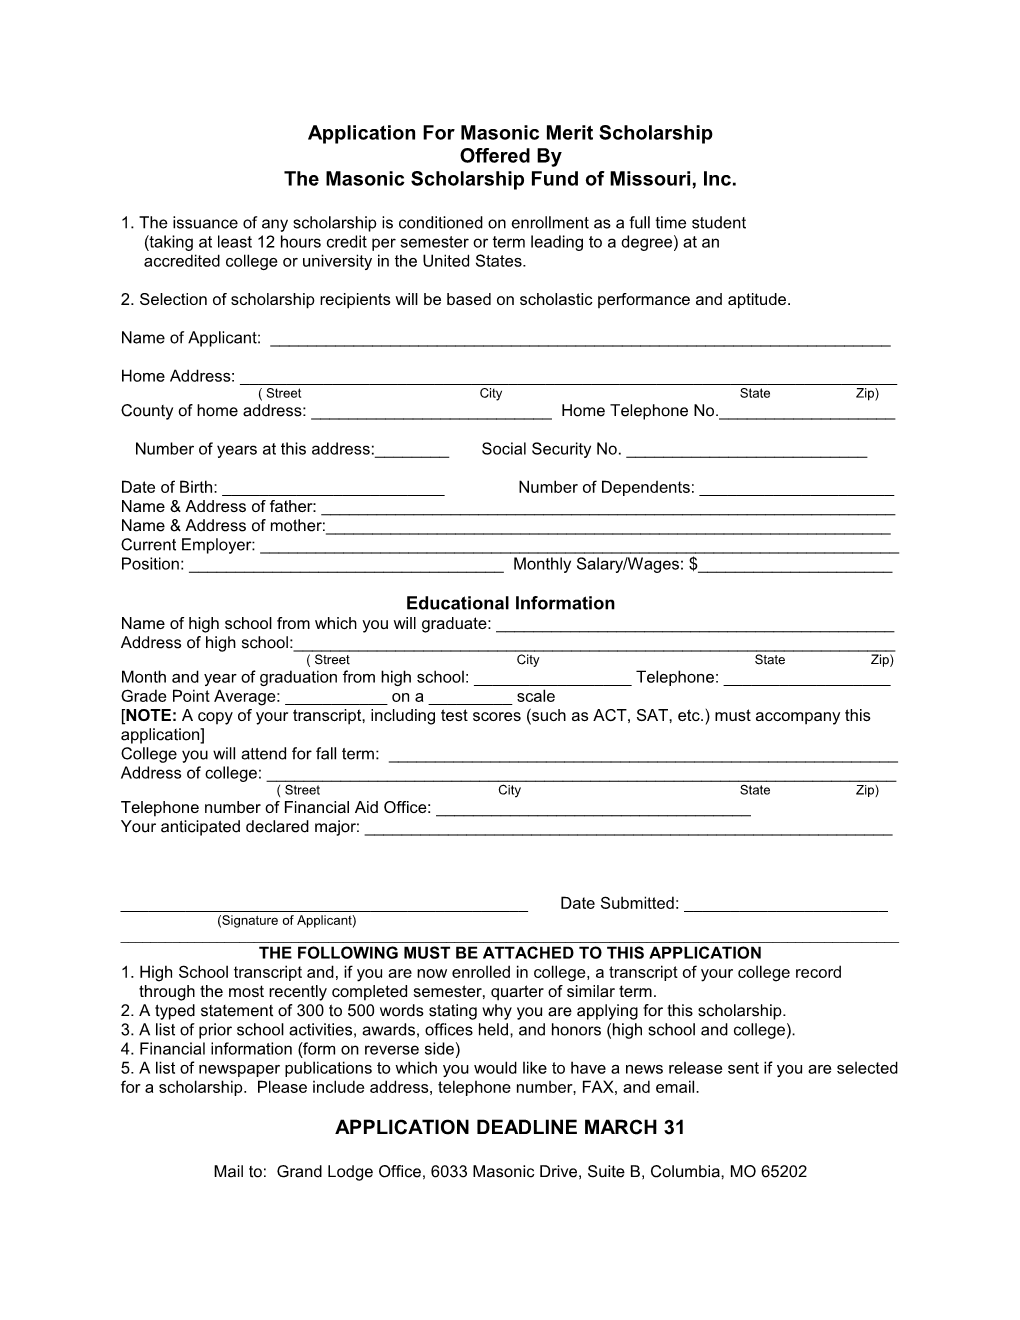 Application for Masonic Merit Scholarship